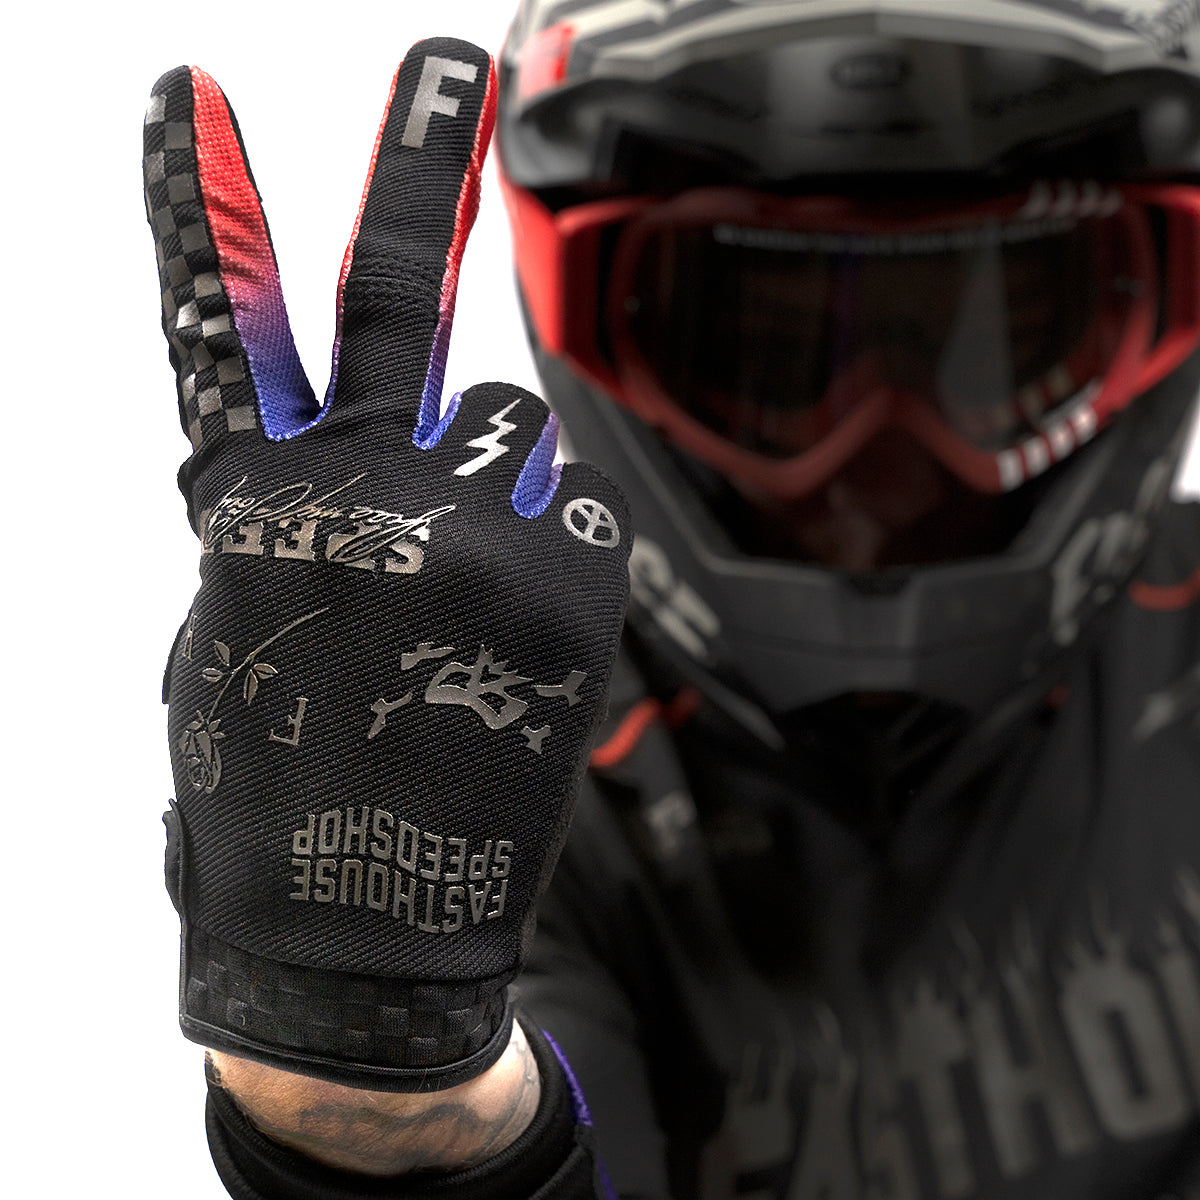 Burn Free Speed Style Glove - Black